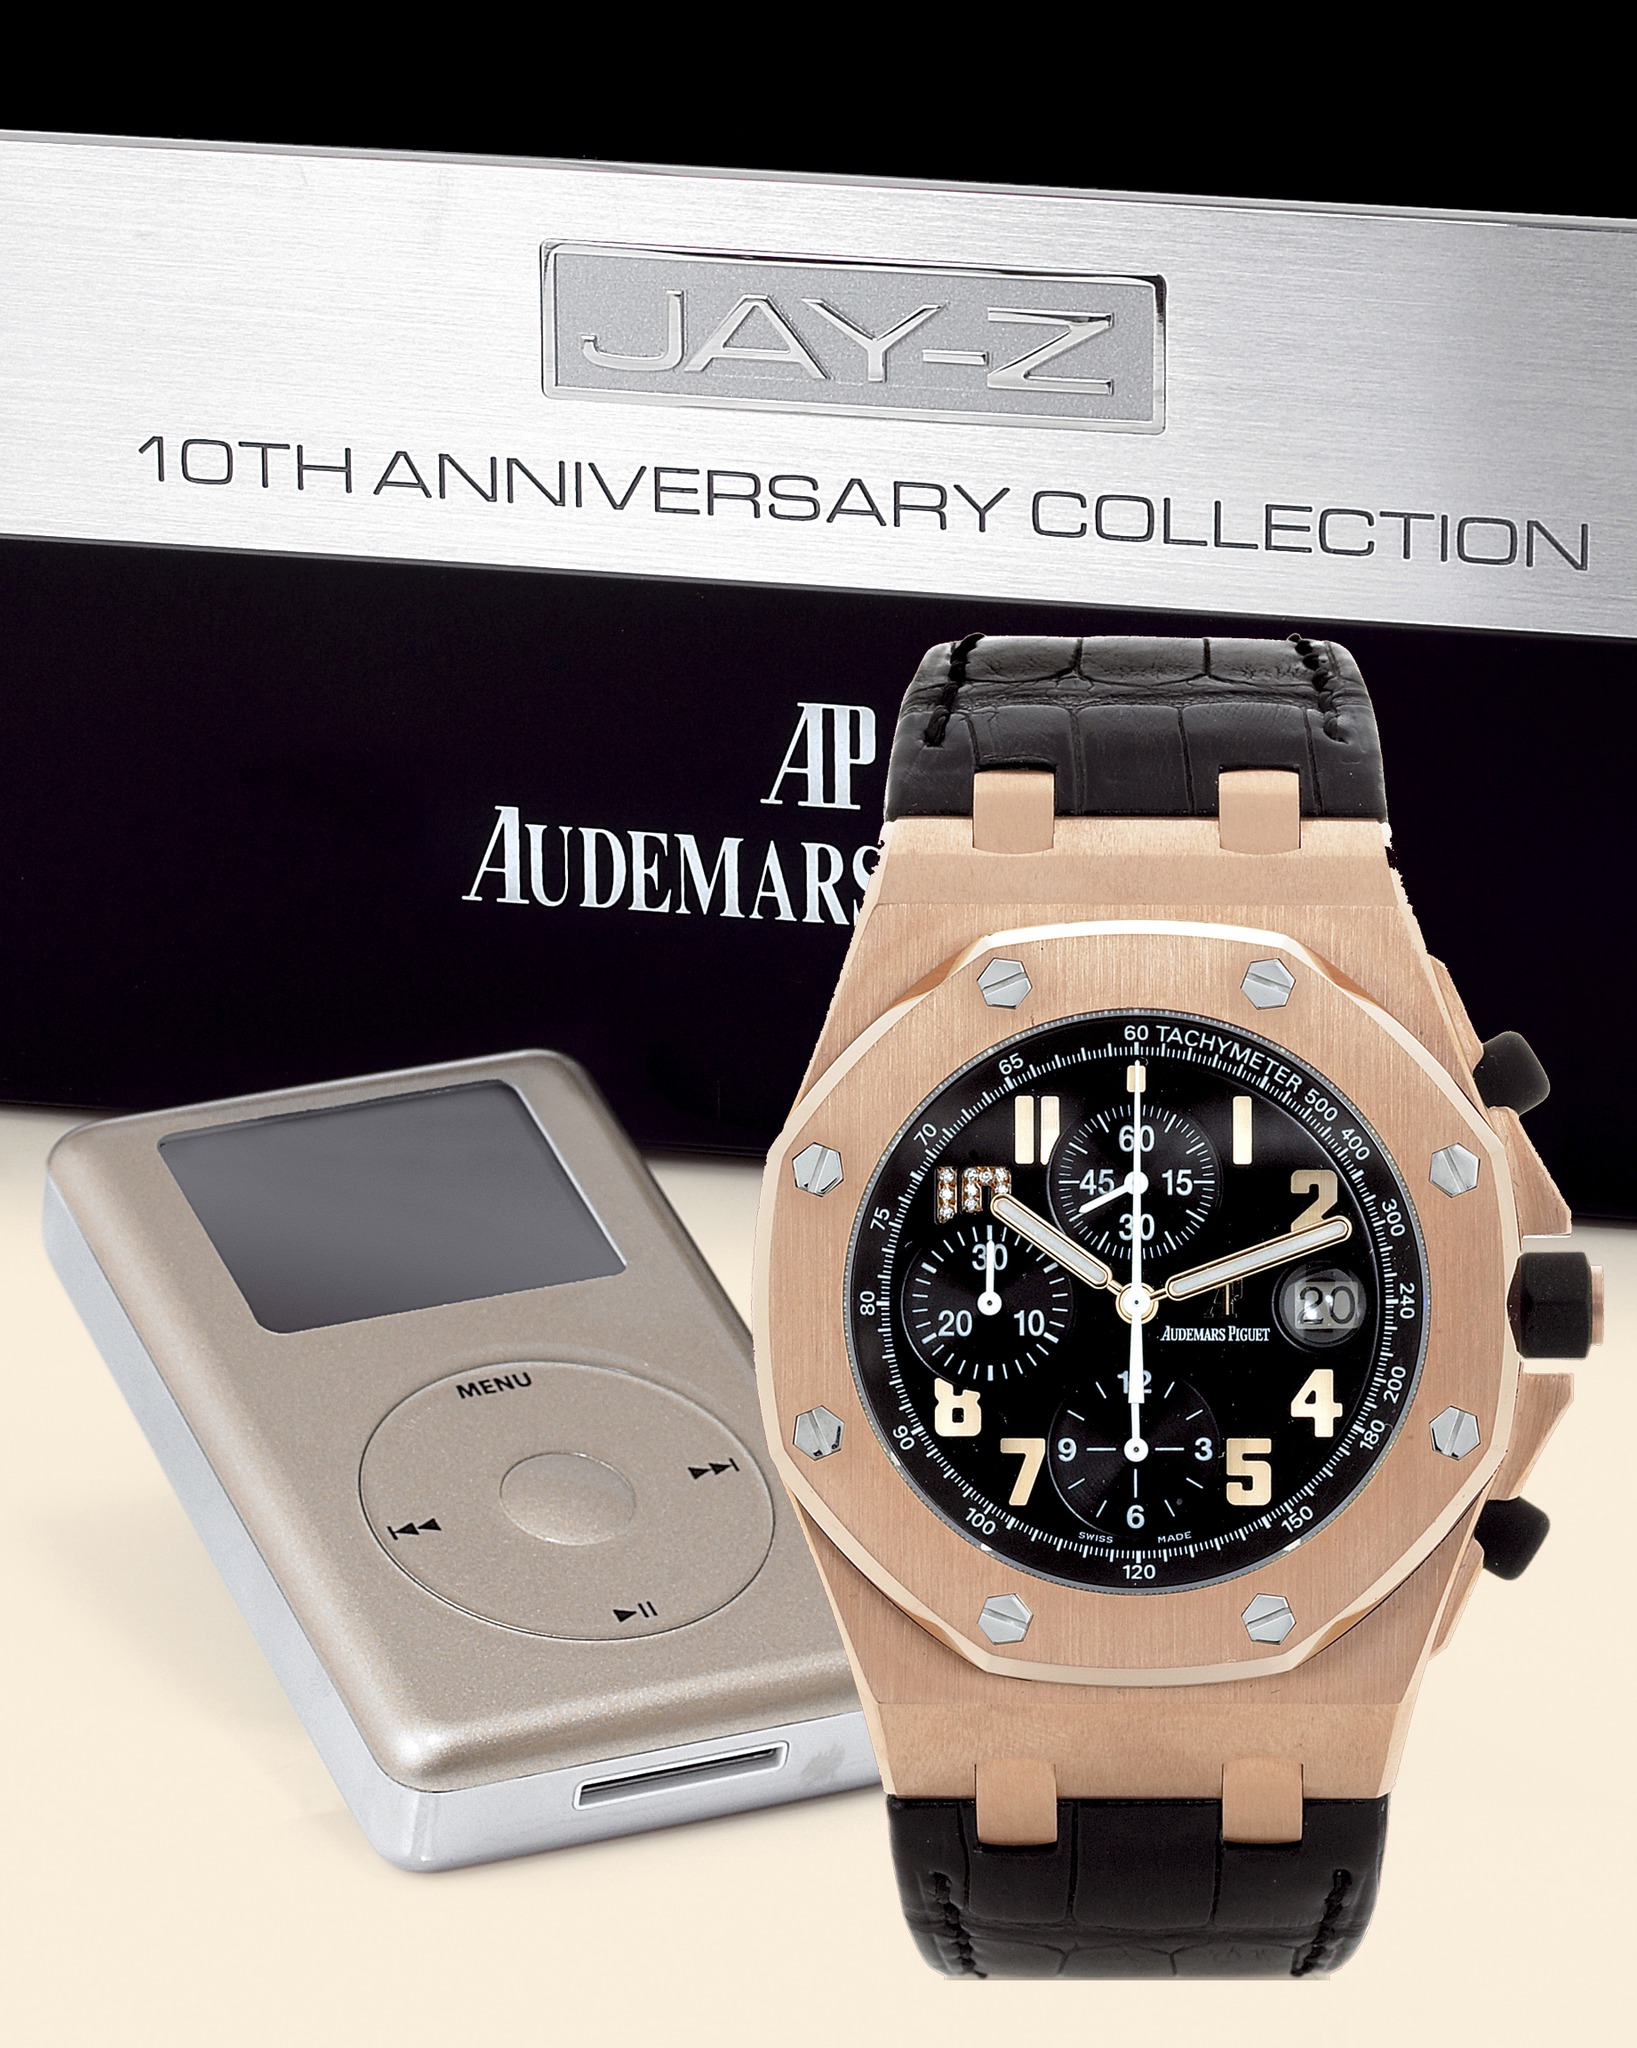 Audemars Piguet Royal Oak Offshore Jay-Z Rose Gold watch REF: 26055OR.OO.D001IN.01